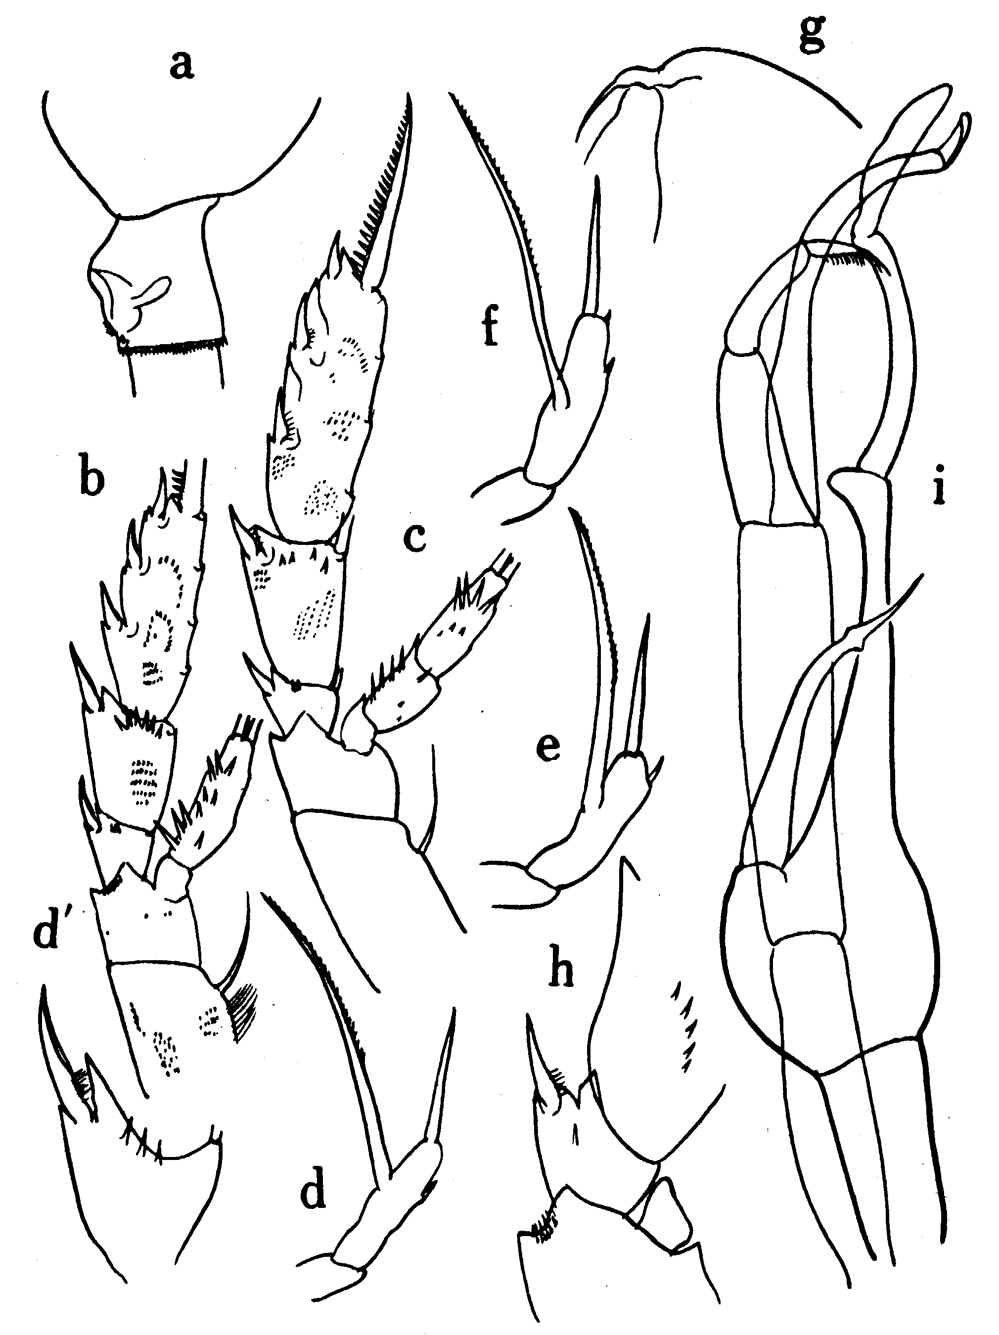 Species Scaphocalanus major - Plate 6 of morphological figures